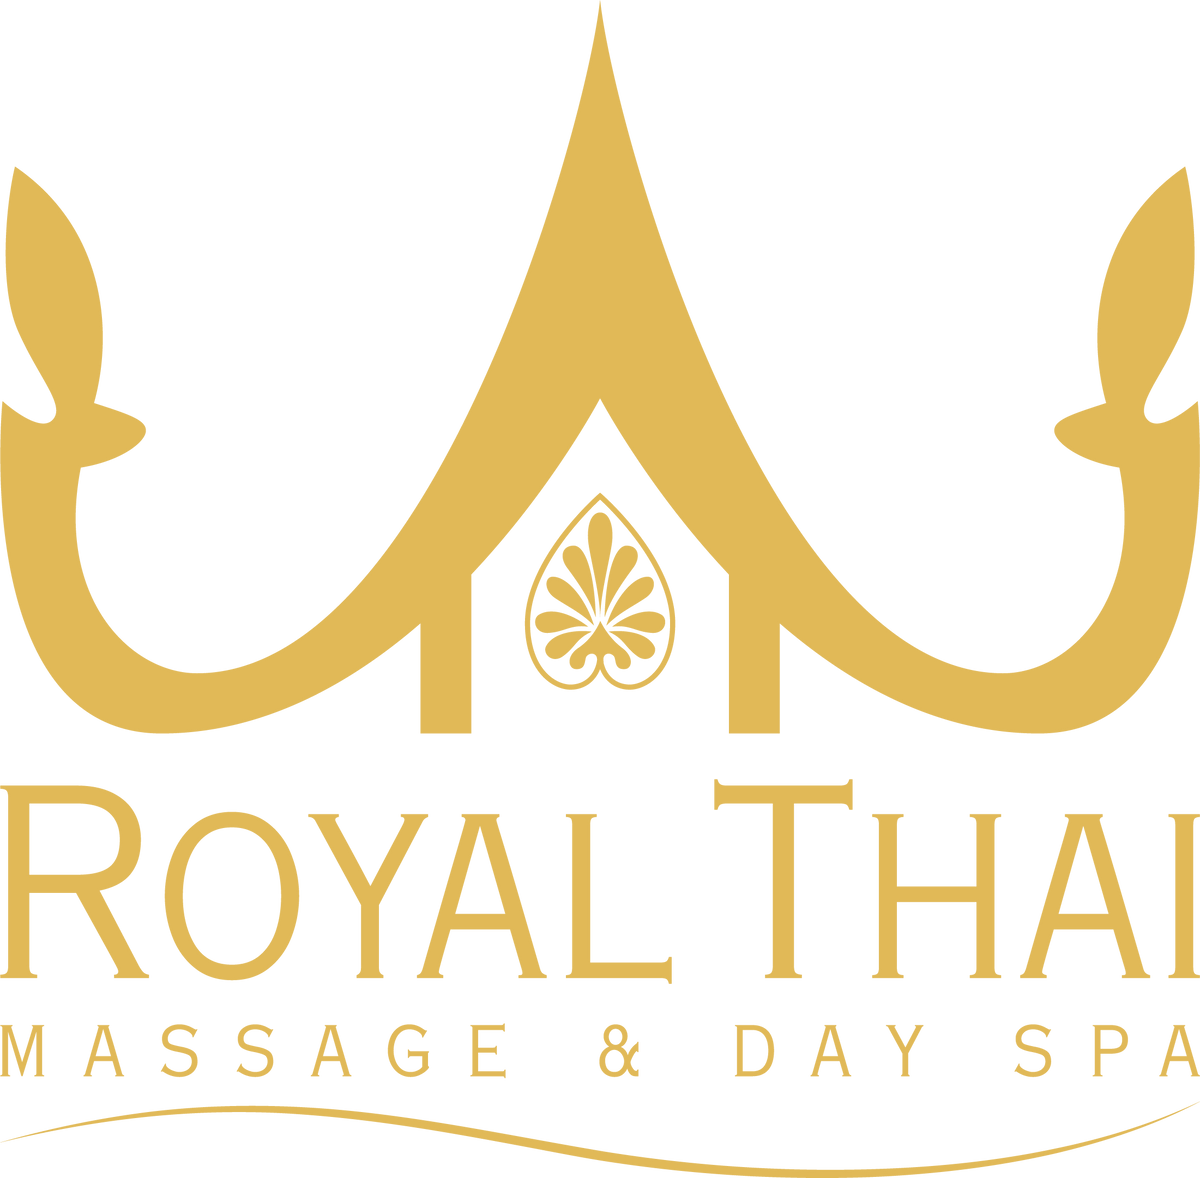 Body Massage Services Online Royal Thai Massage New Port Beach Ca Royal Thai Massage And Day